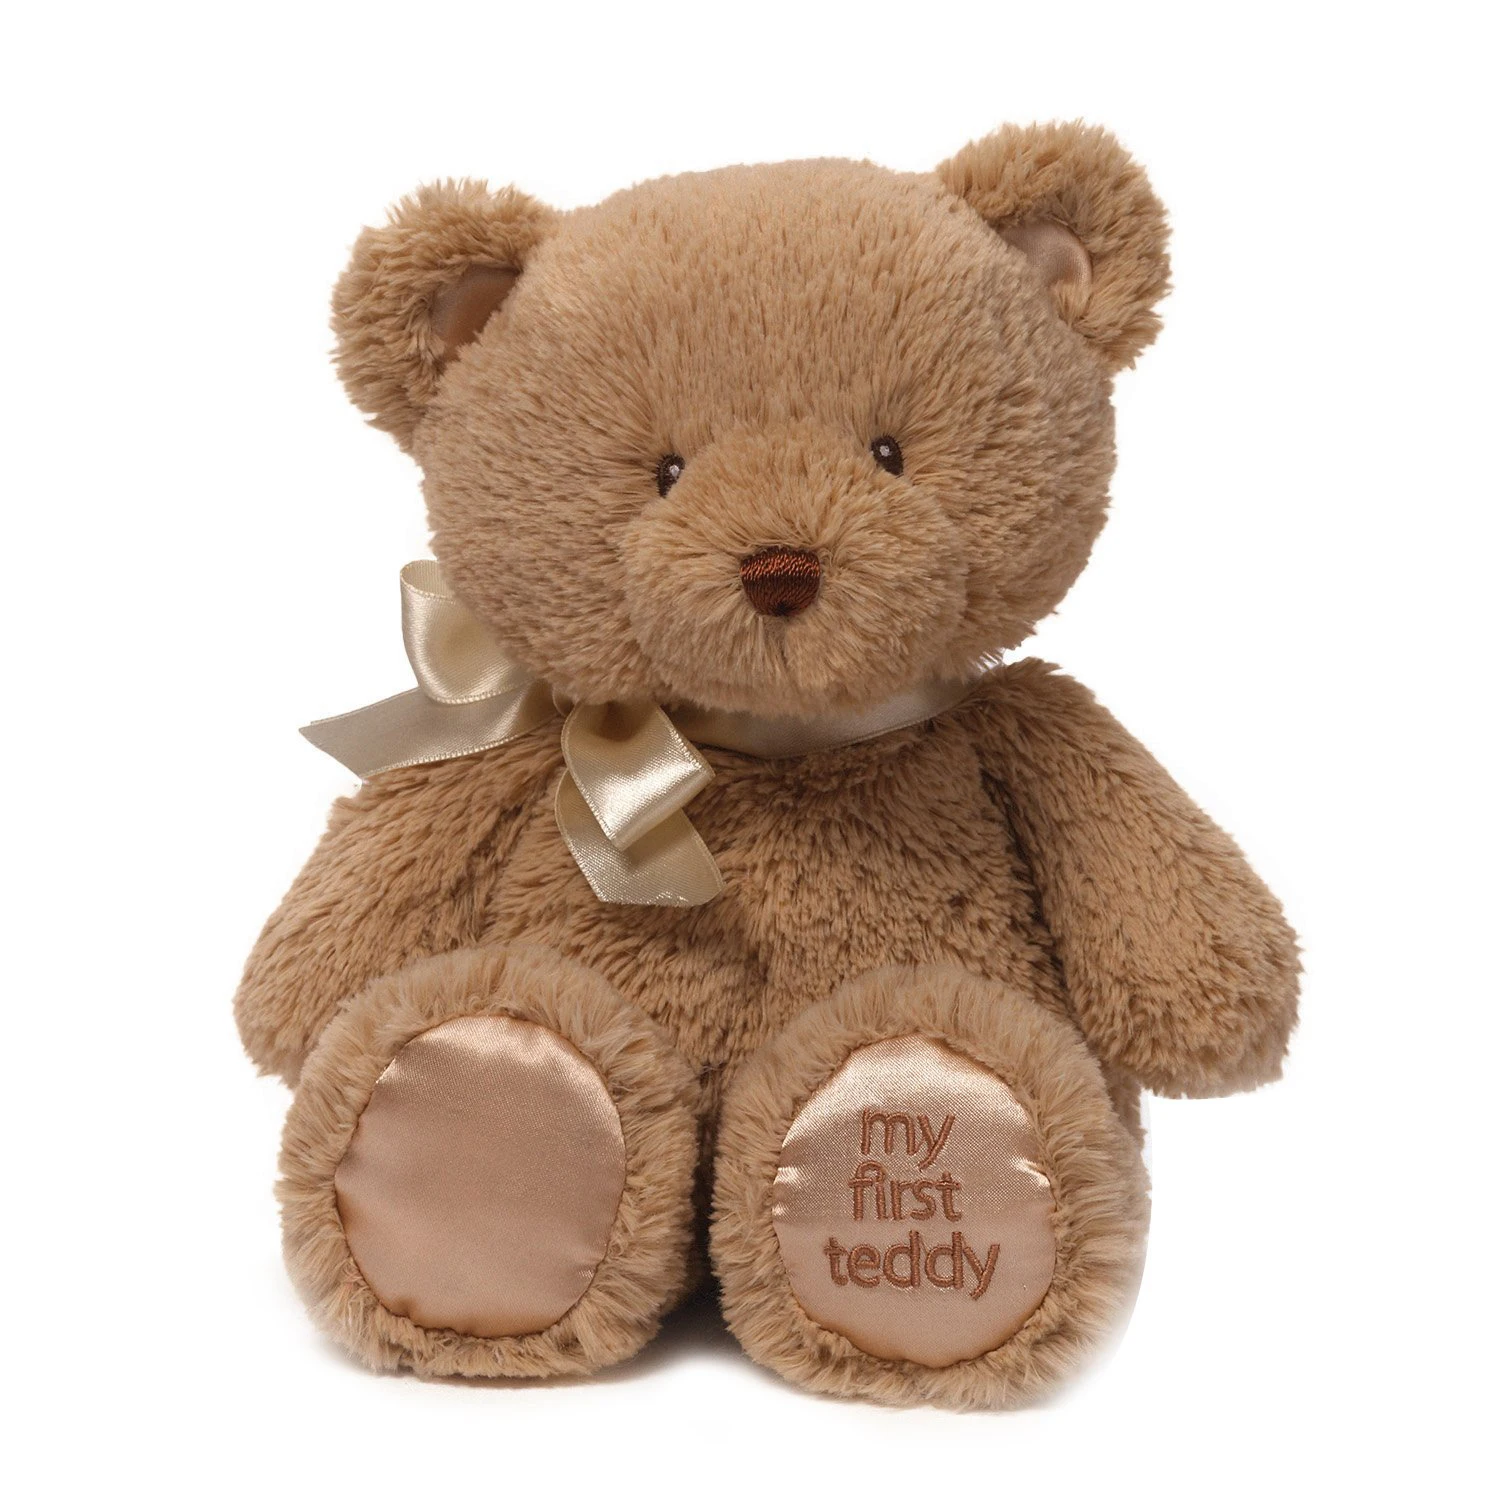 cute stuffed teddy bears